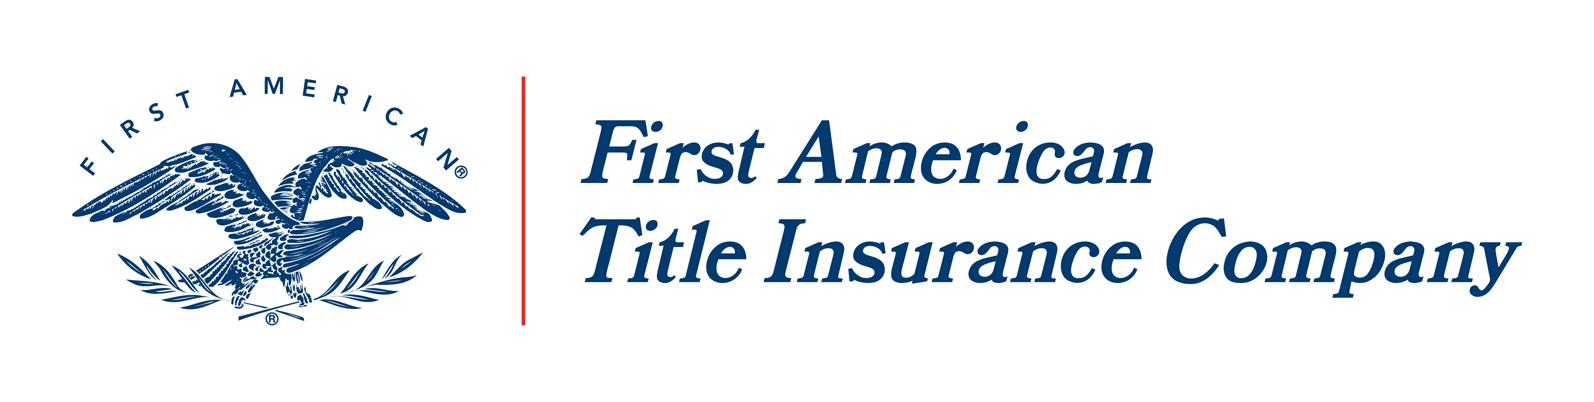 First American Title Logo - First American Title Logo - Child Abuse Prevention Center